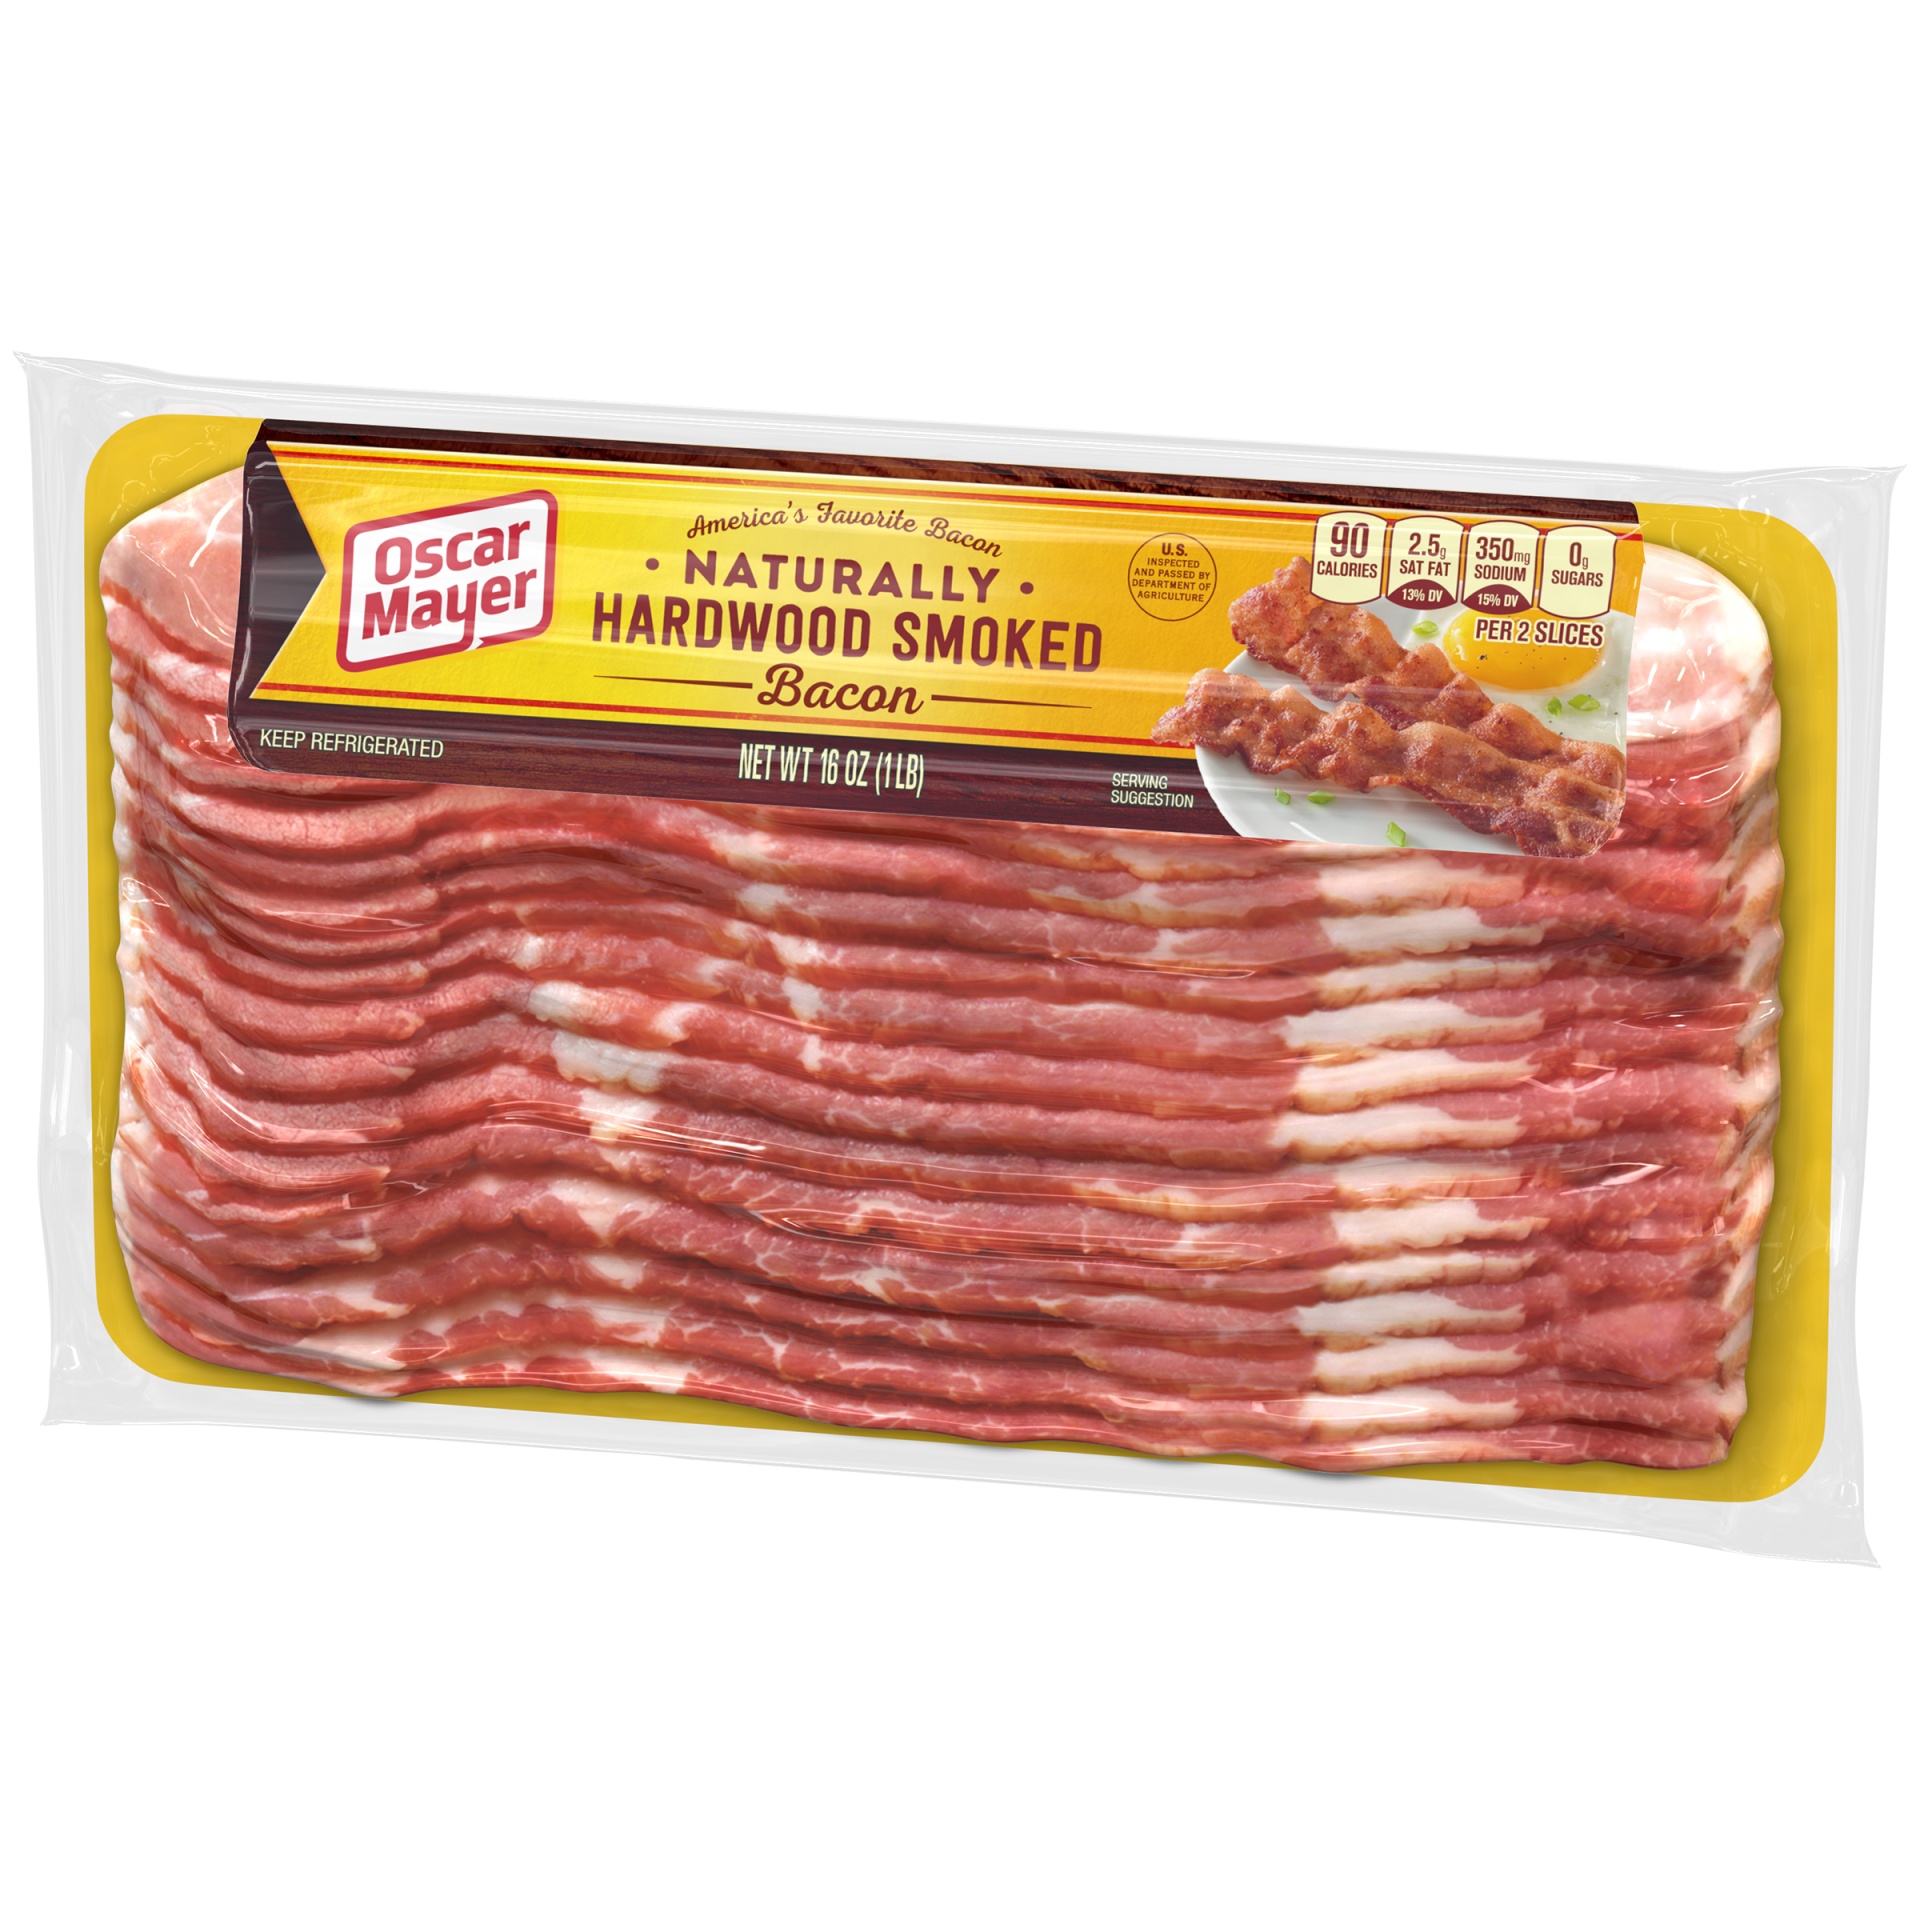 slide 9 of 12, Oscar Mayer Naturally Hardwood Smoked Bacon Pack, 17-19 slices, 16 oz